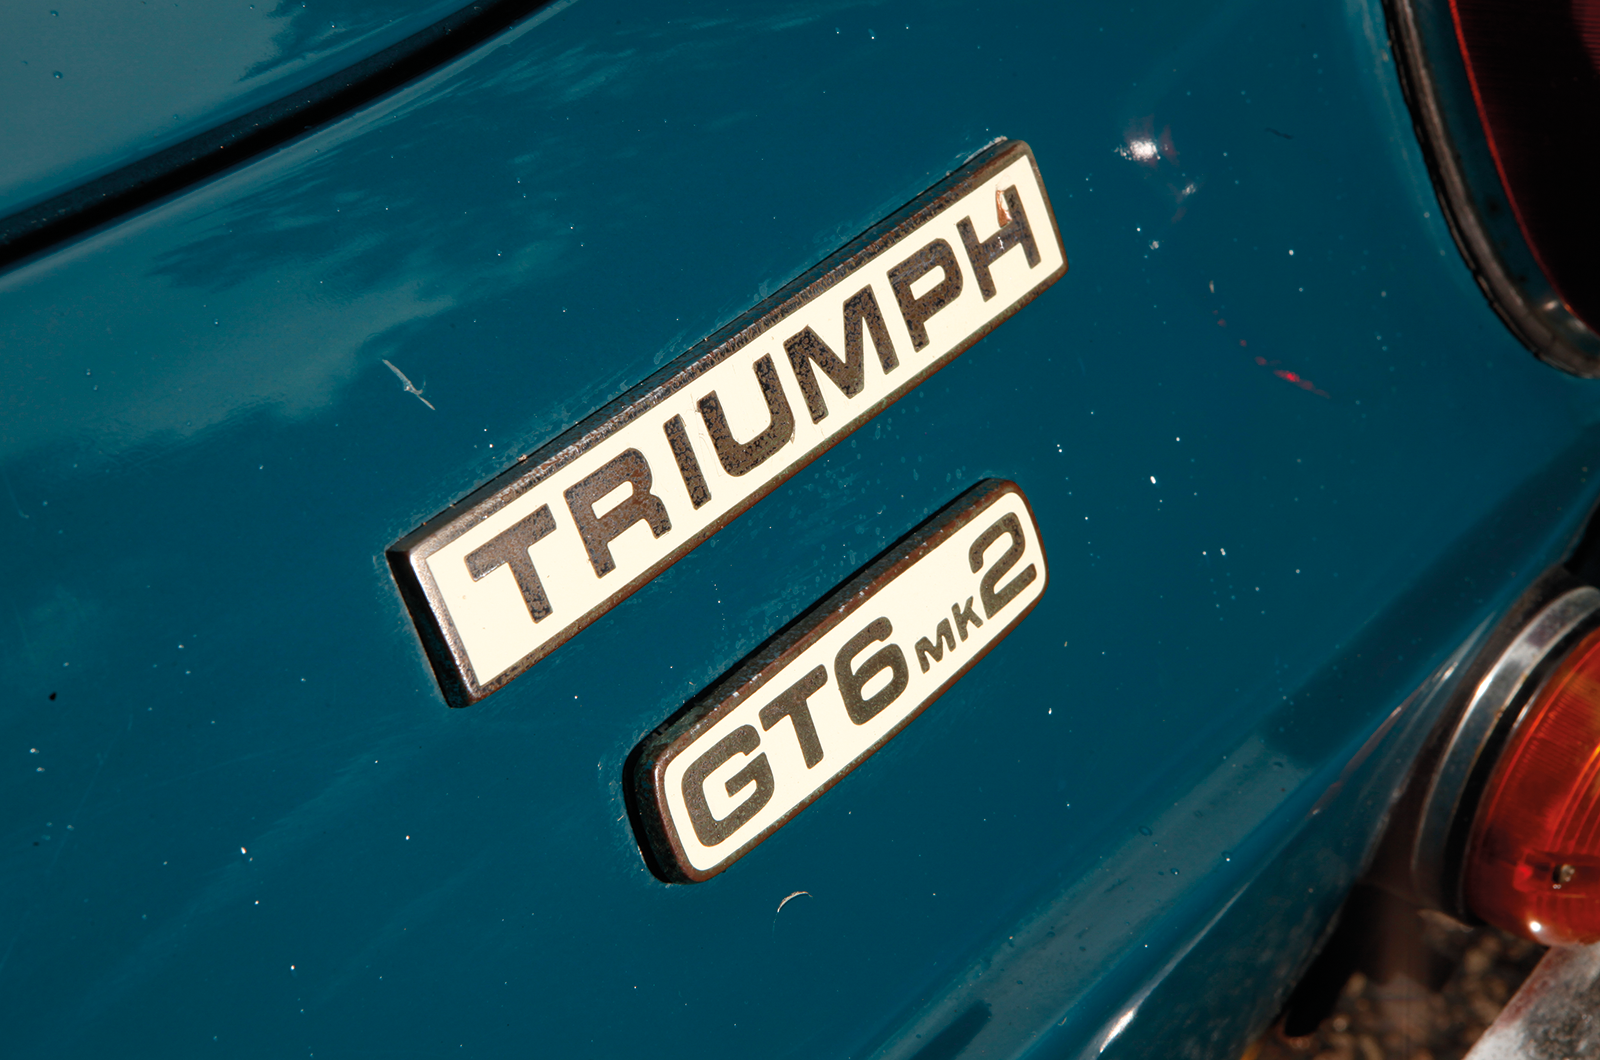 Classic & Sports Car – Triumph GT6: Canley’s super six